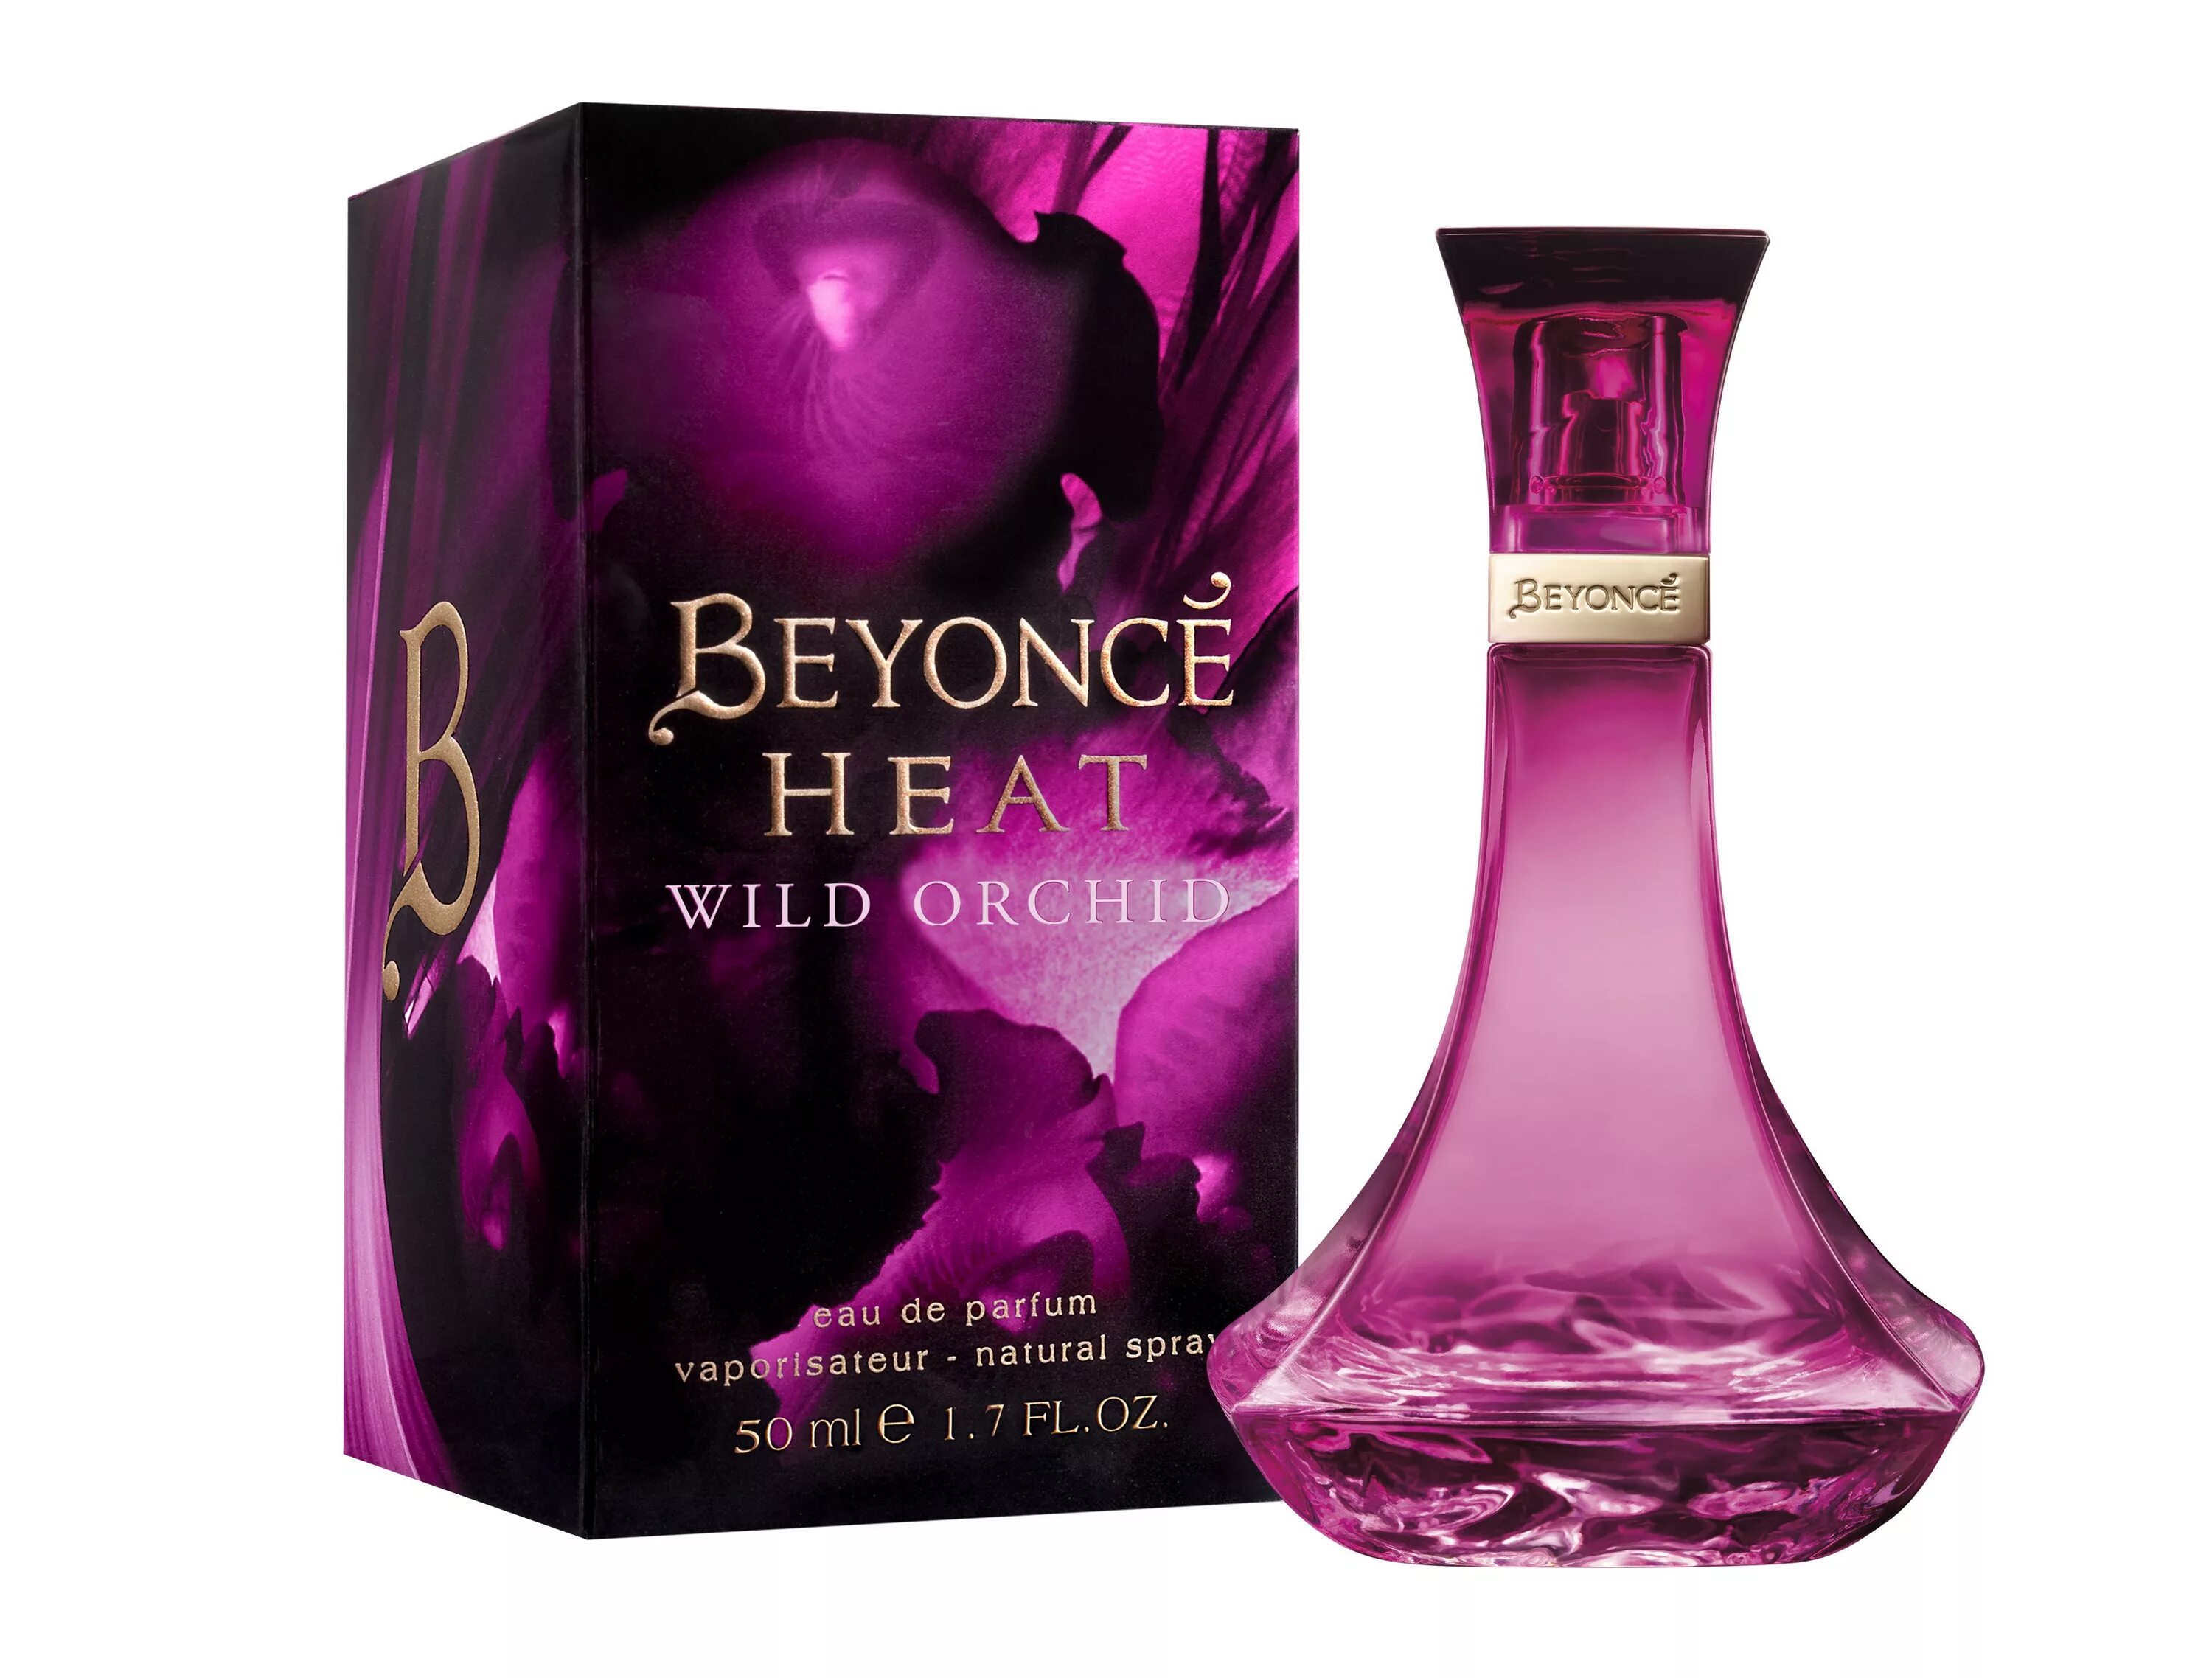 Beyonce Heat Wild Orchid 100 мл тестер. Духи Beyonce Heat 100 мл. Beyonce Heat парфюмерная вода 50мл. Wild Orchid духи.